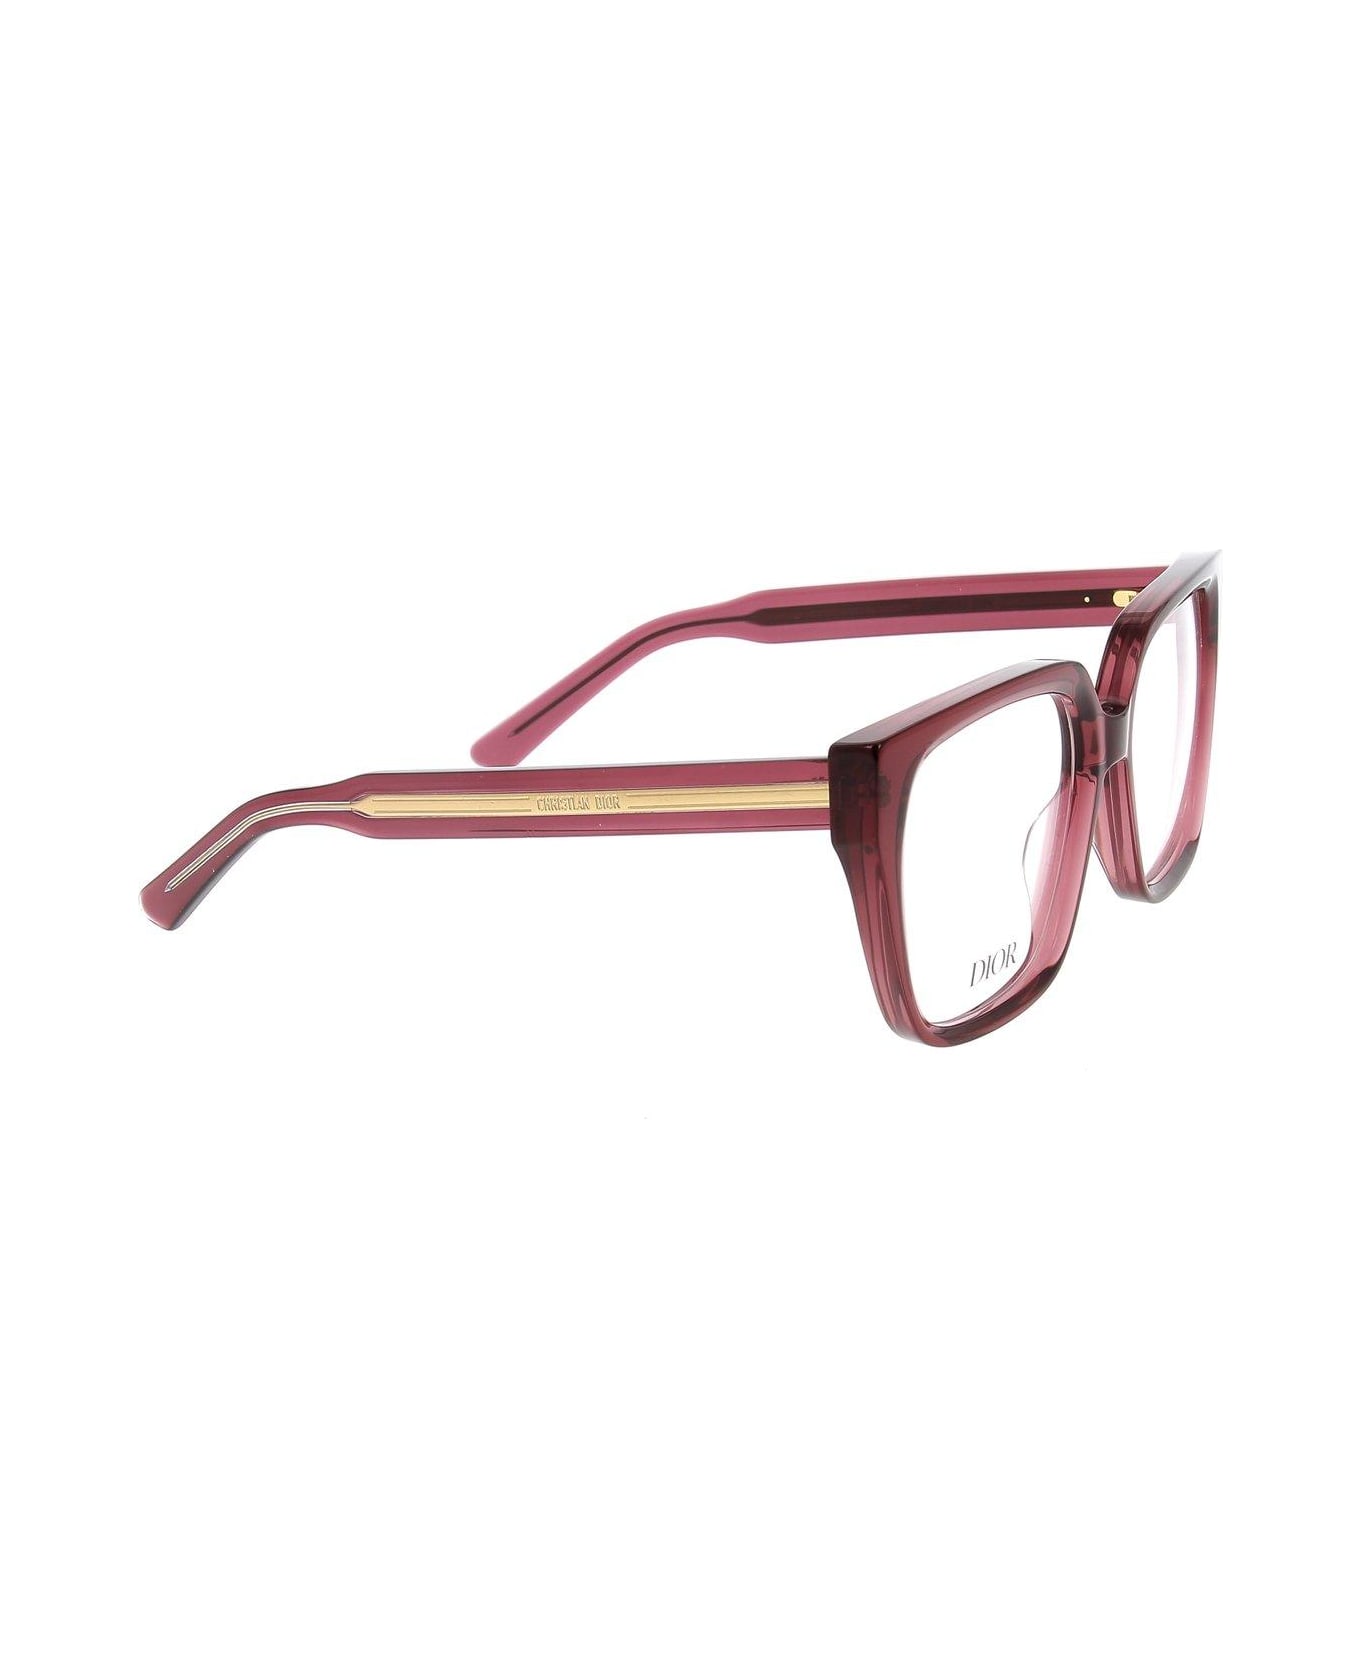 Dior Eyewear Butterfly Frame Glasses - 3500